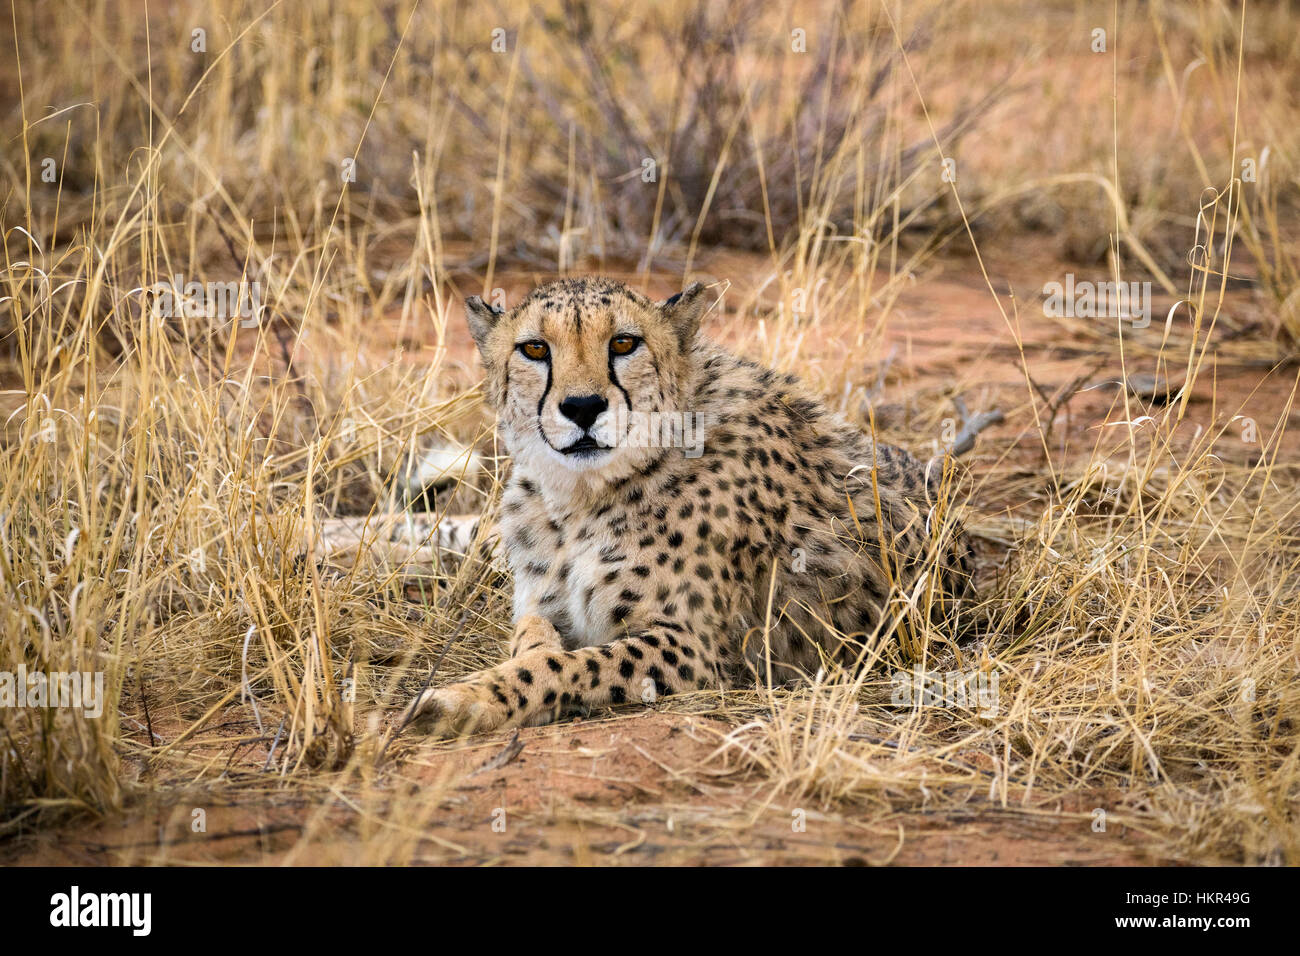 Cheetah resting in grasses, Acinonyx jubatus, Okonjima Reserve, Namibia, Africa by Monika Hrdinova/Dembinsky Photo Assoc Stock Photo